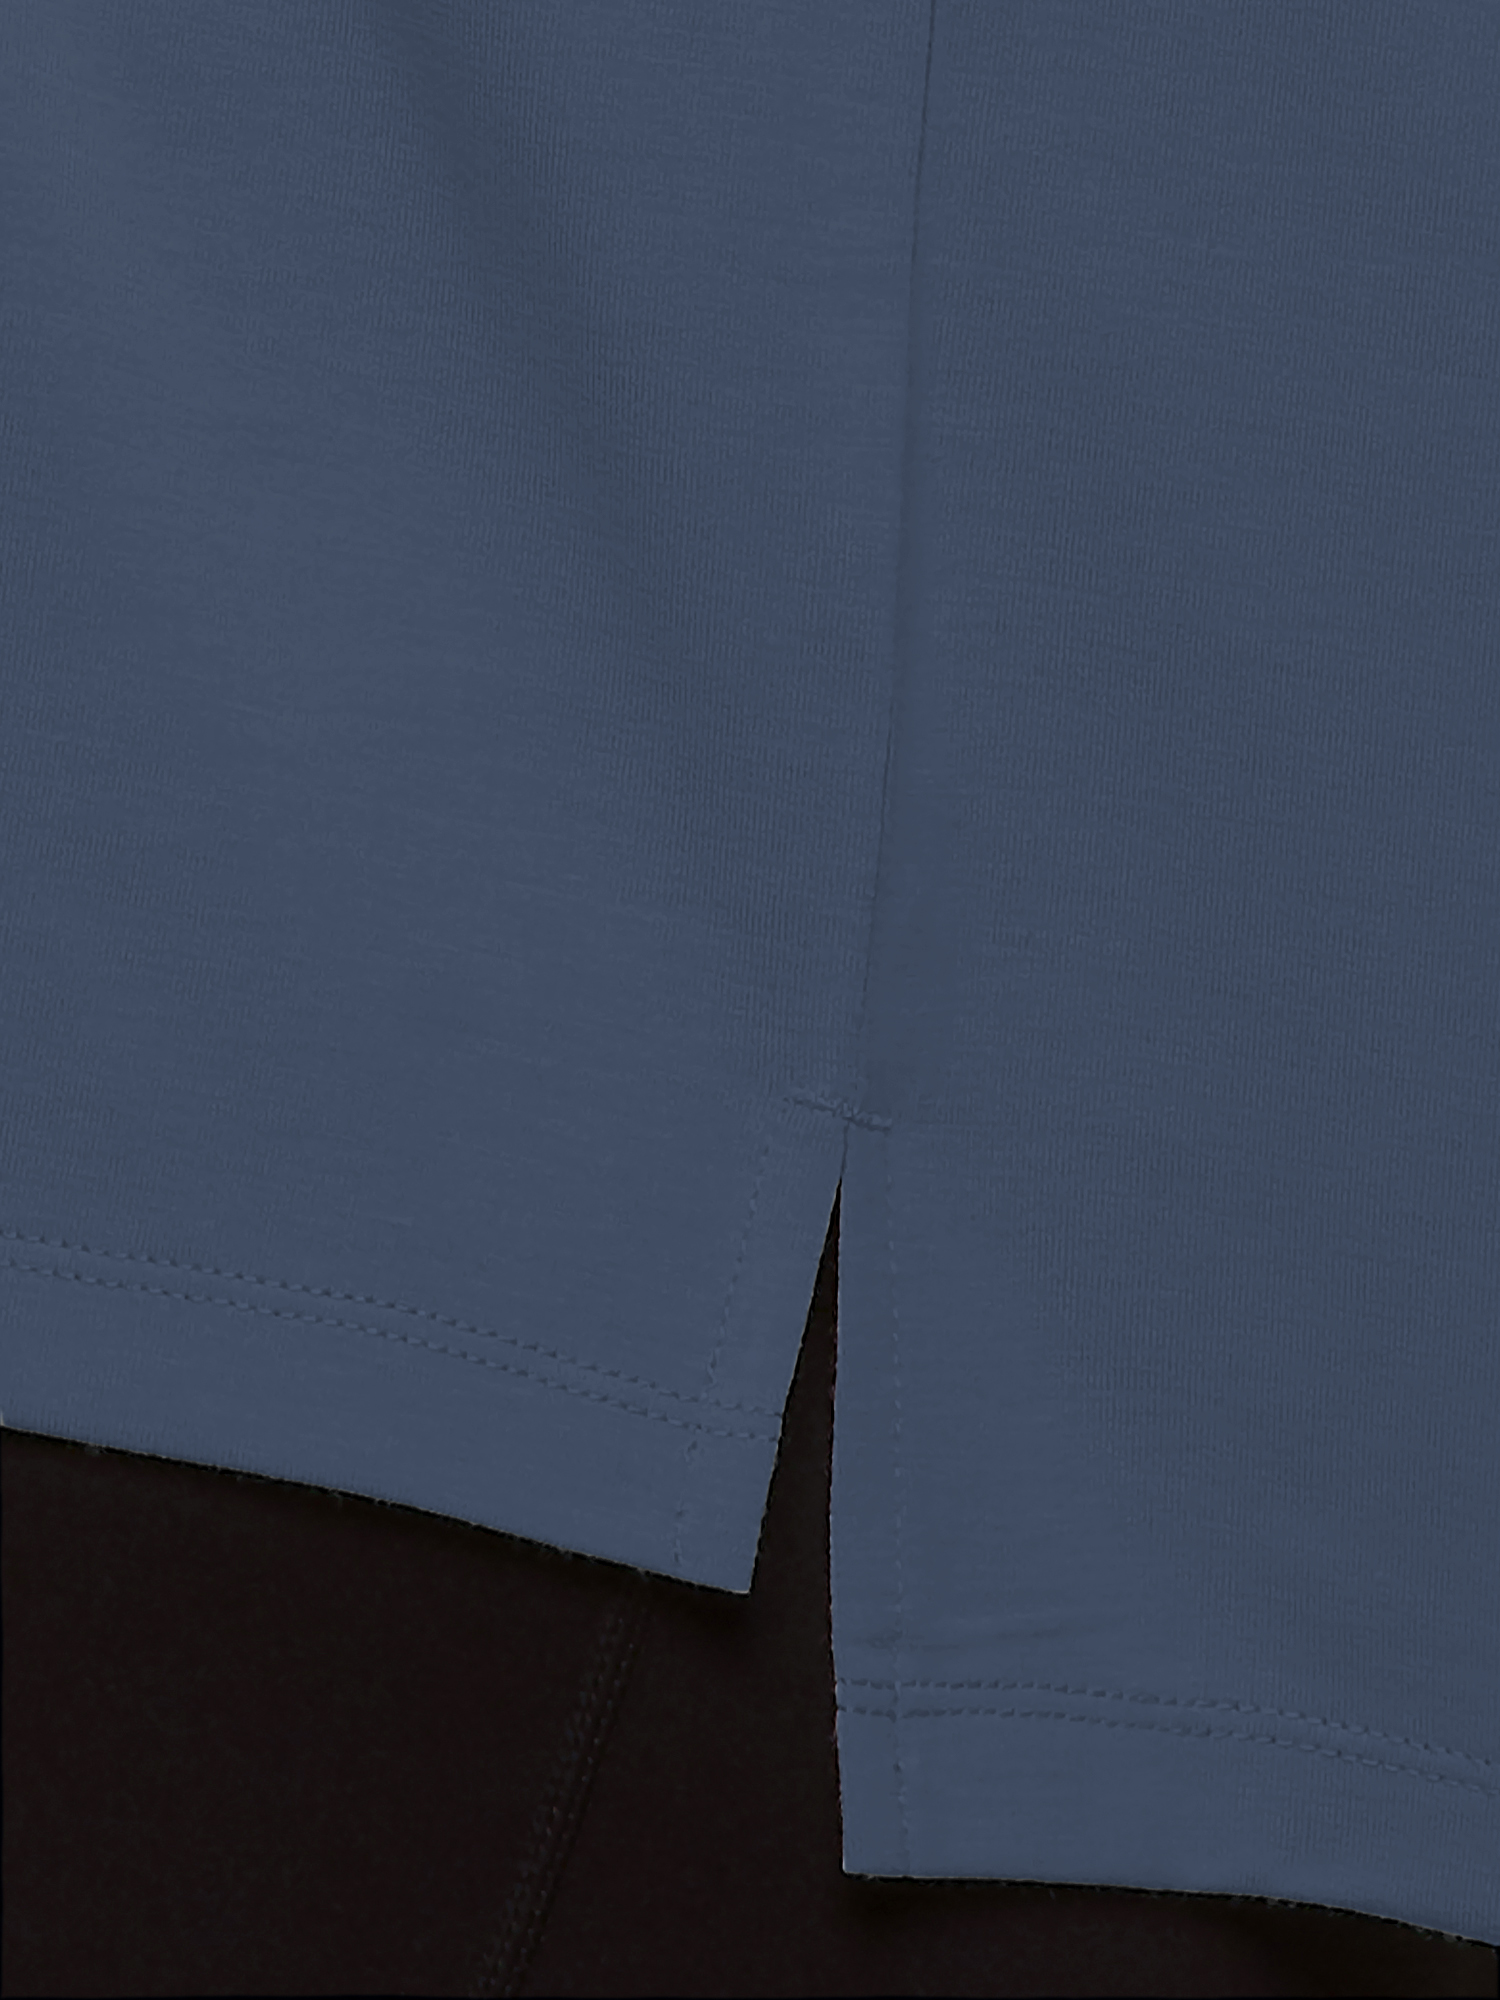 Reebok Women's Short Sleeve Jersey Graphic Tee - image 4 of 4